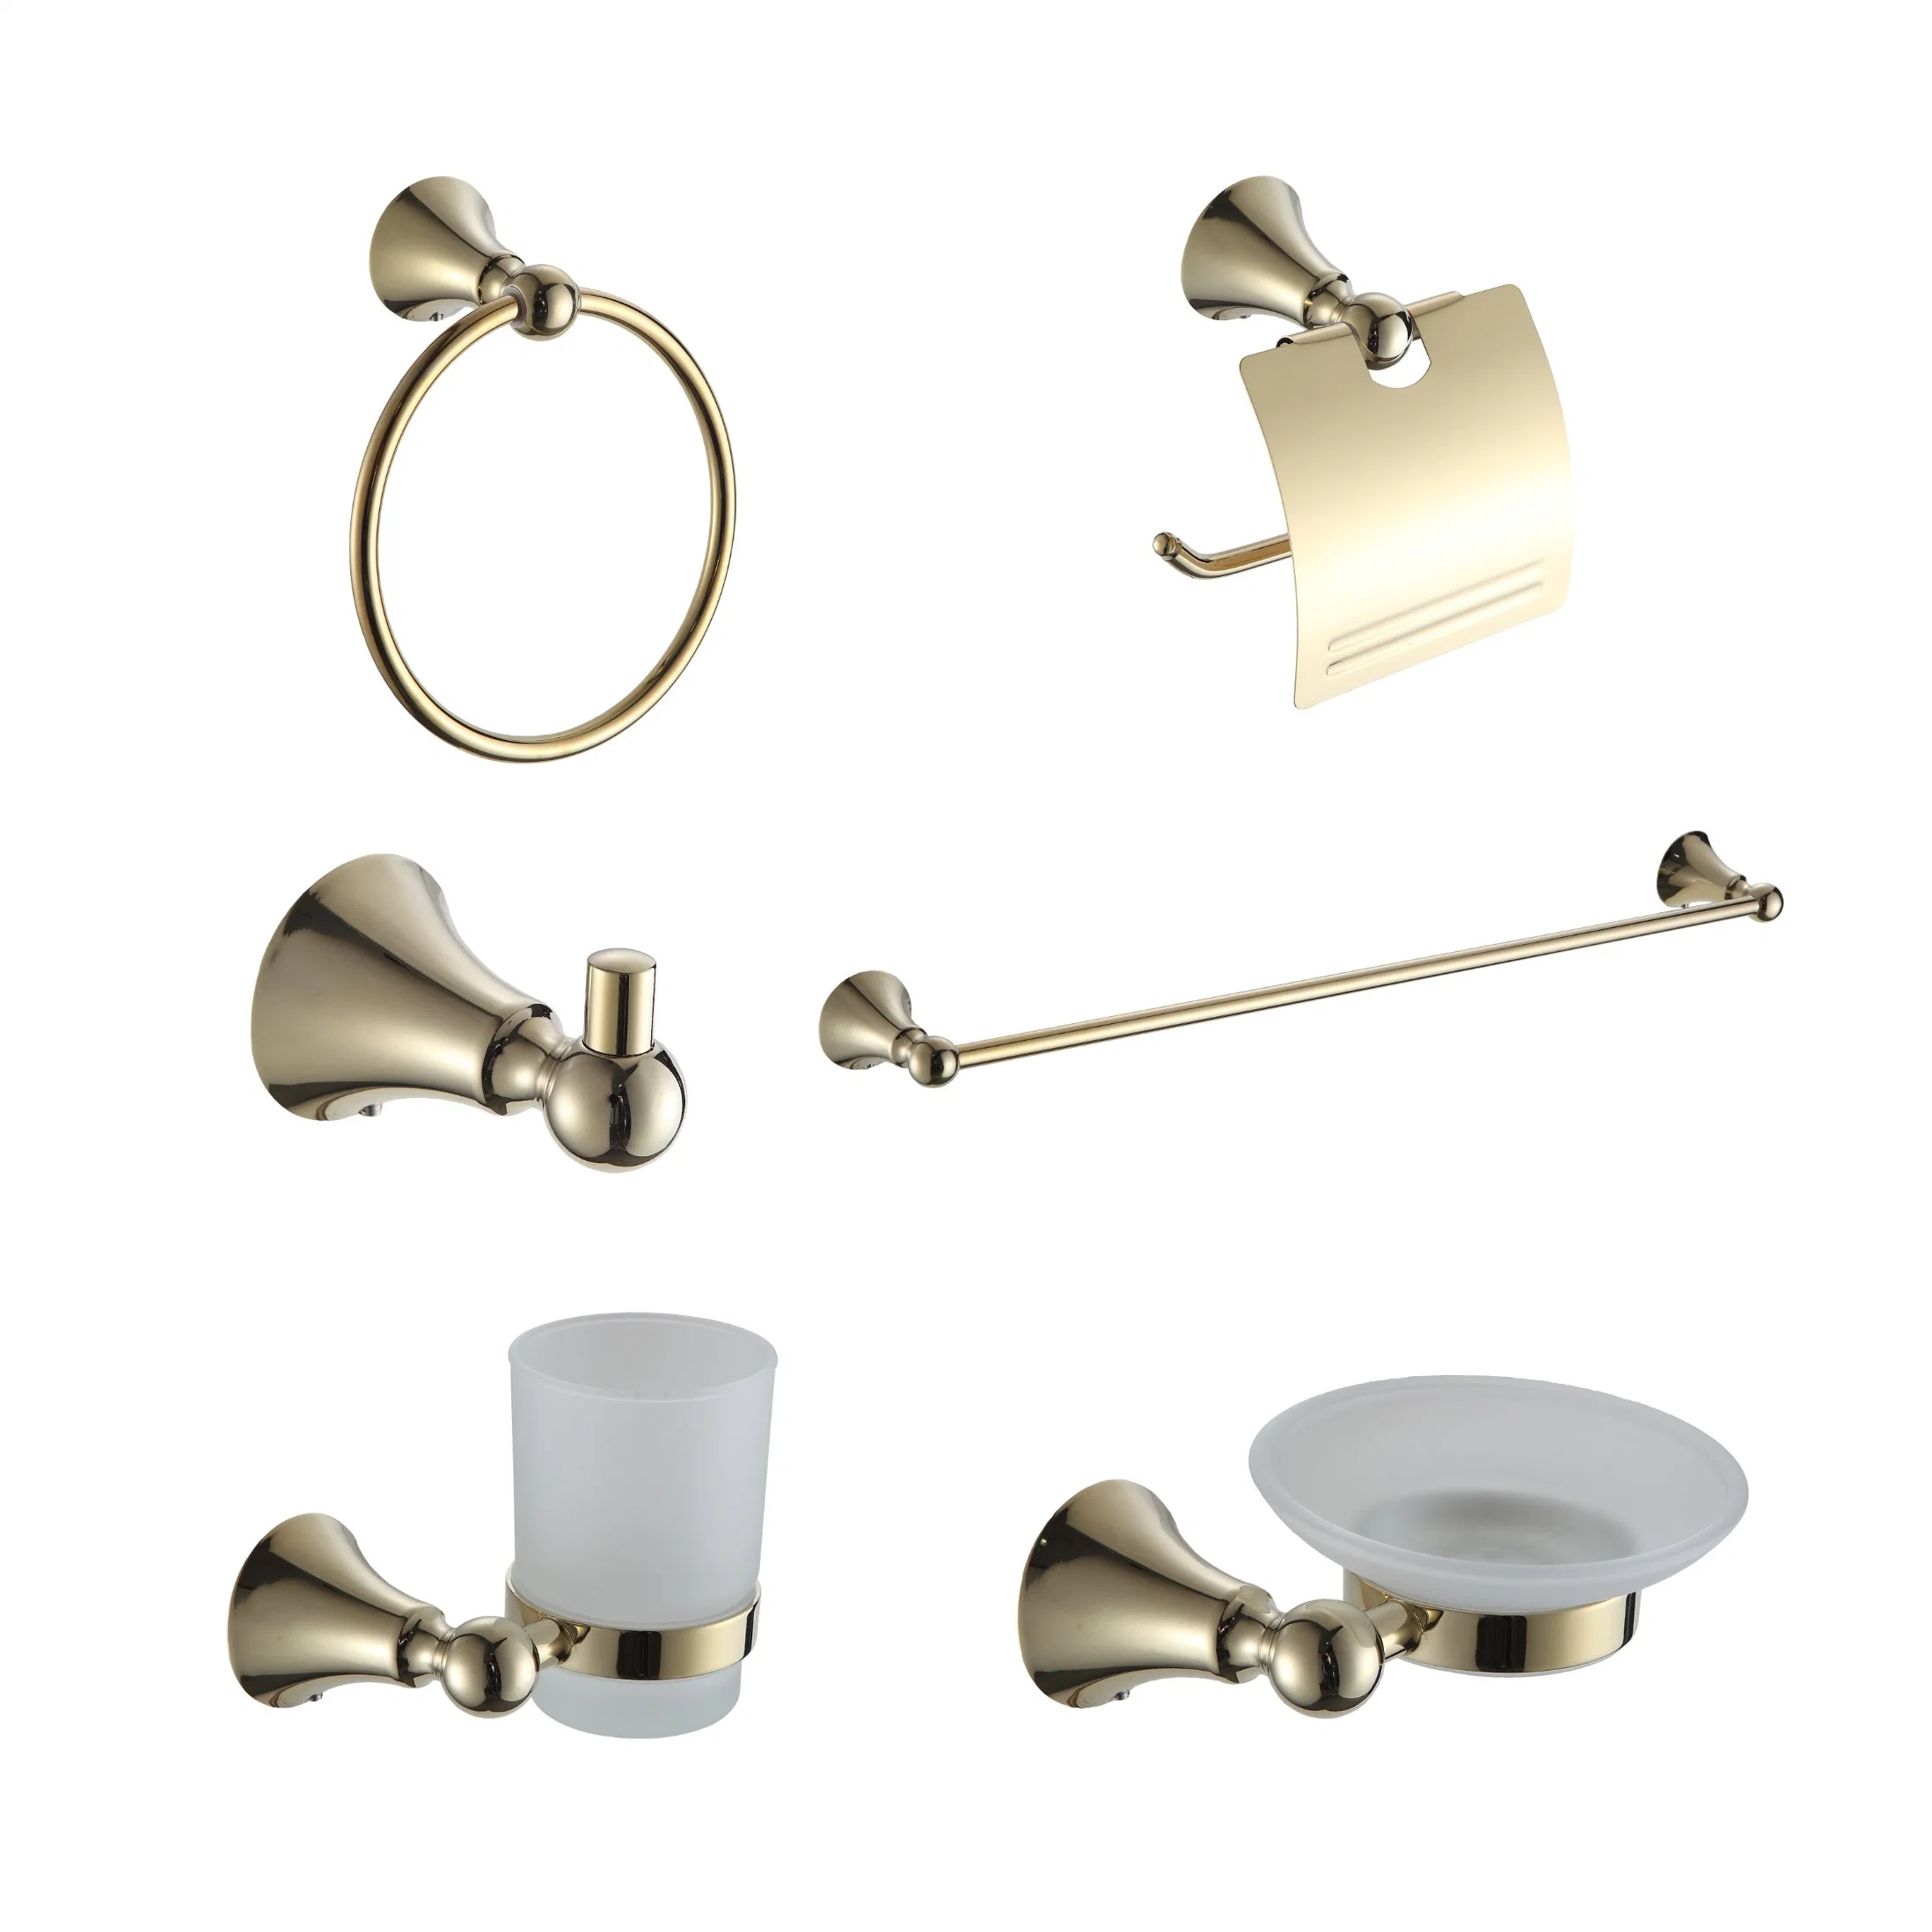 8 Pieces Bath Design Wall Mount Gold Bathroom Hardware Accessories Set